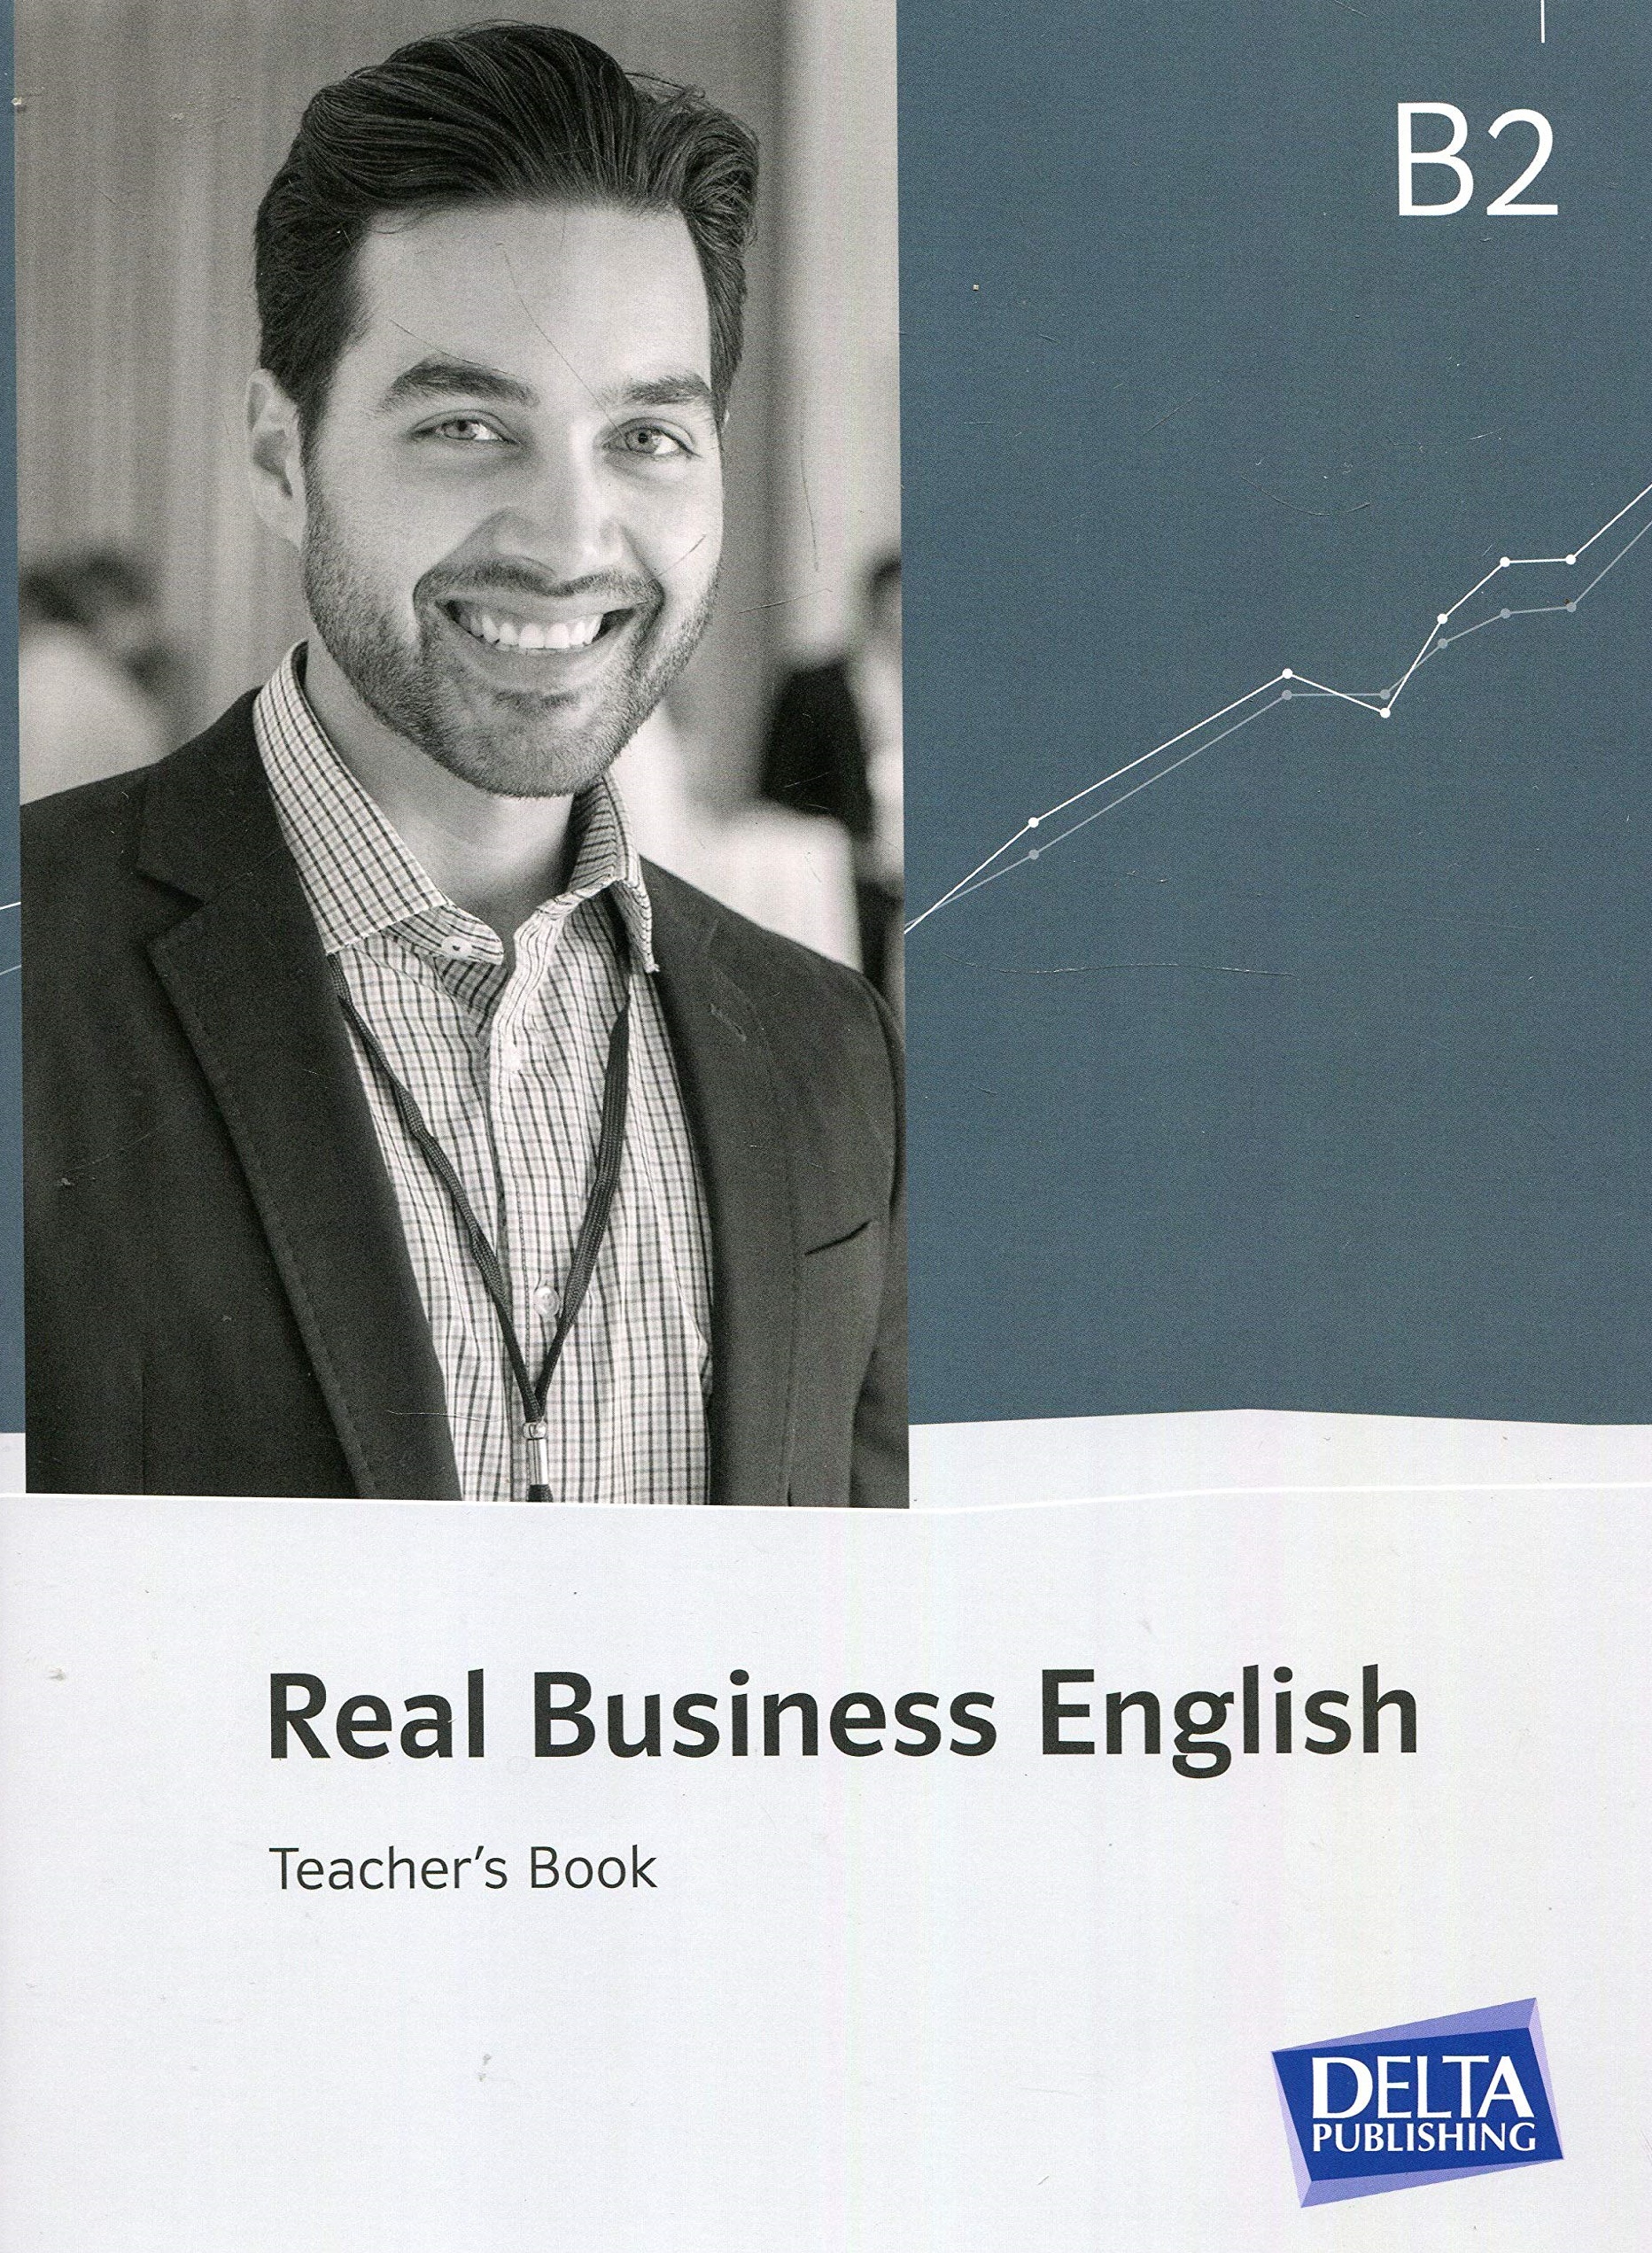 Real Business English B2 Teacher’s Book / Книга для учителя